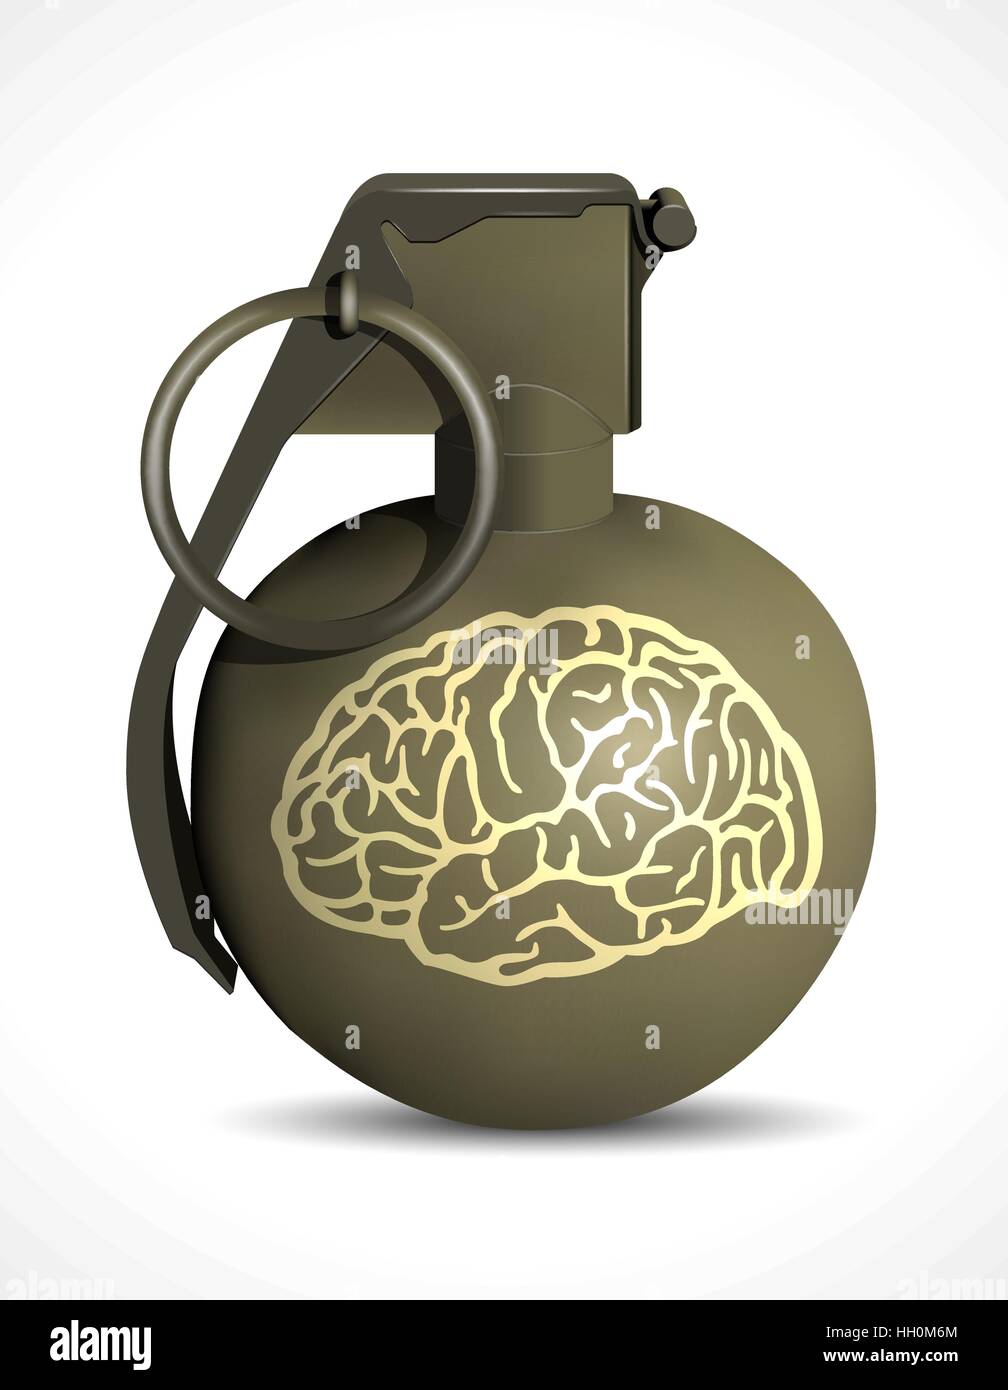 Grenade - brain damage Stock Vector